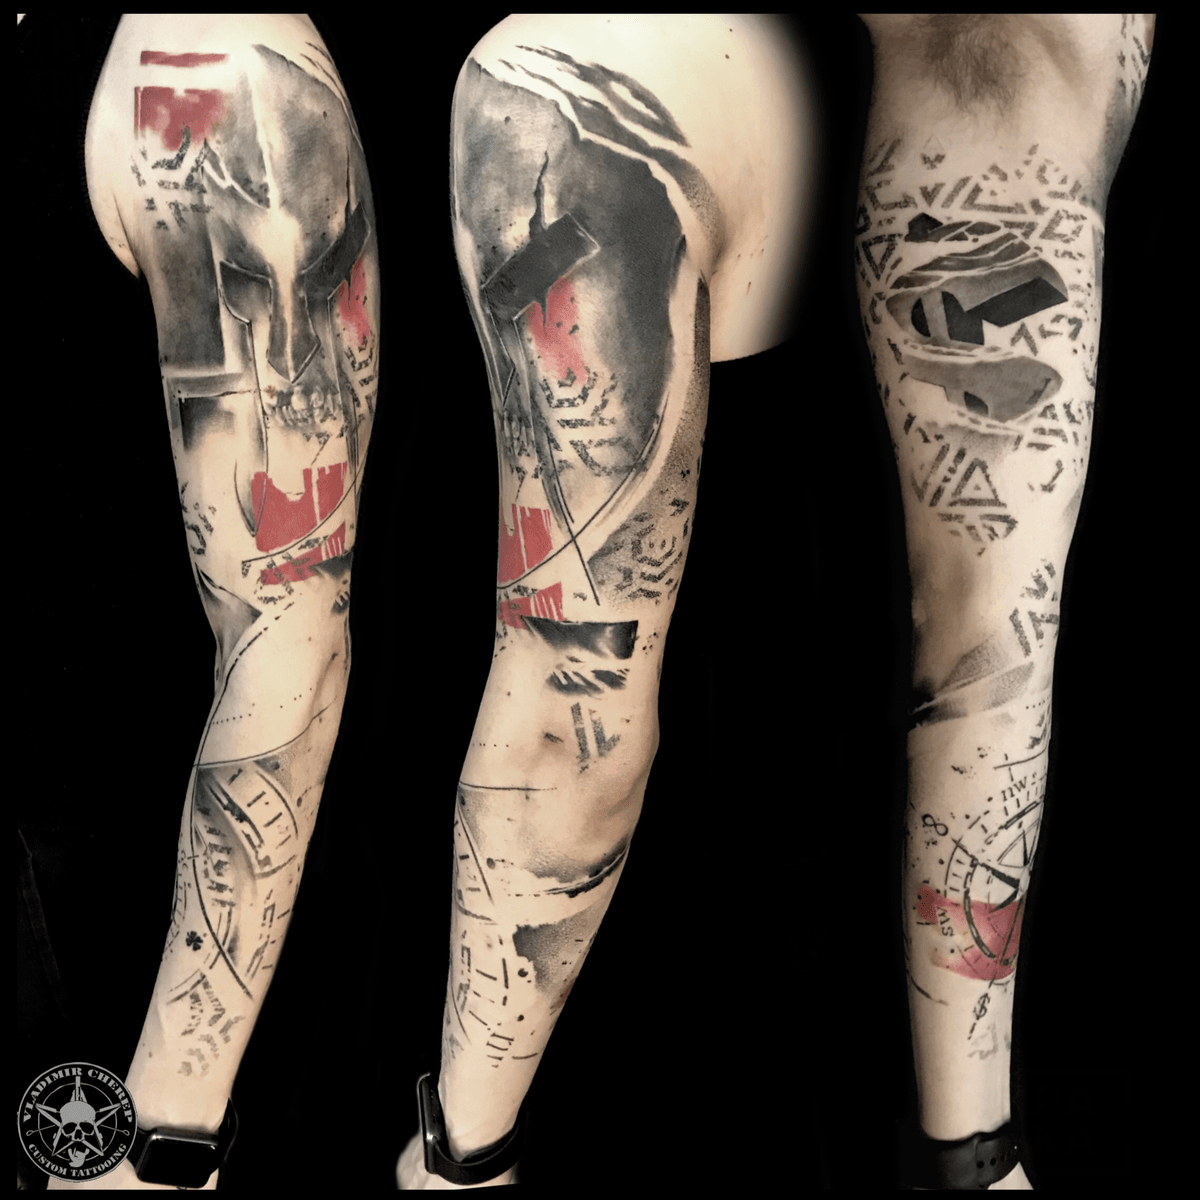 Tattoo uploaded by Vladimir Cherep • #vladimircherep #colortattoo # ...